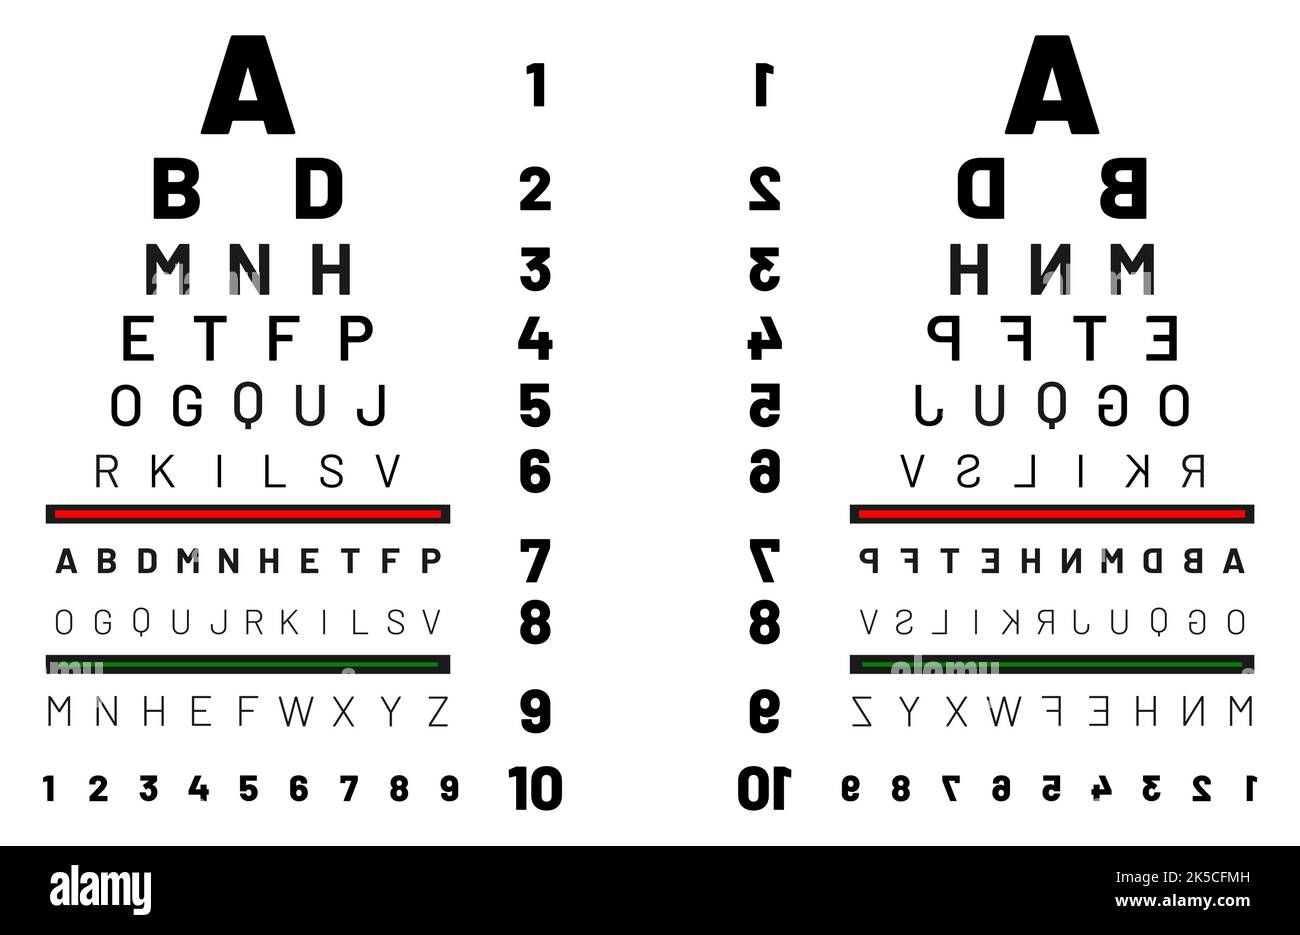 https://c8.alamy.com/comp/2K5CFMH/patient-eye-exam-chart-eye-test-chart-vision-test-board-vector-illustration-2K5CFMH.jpg